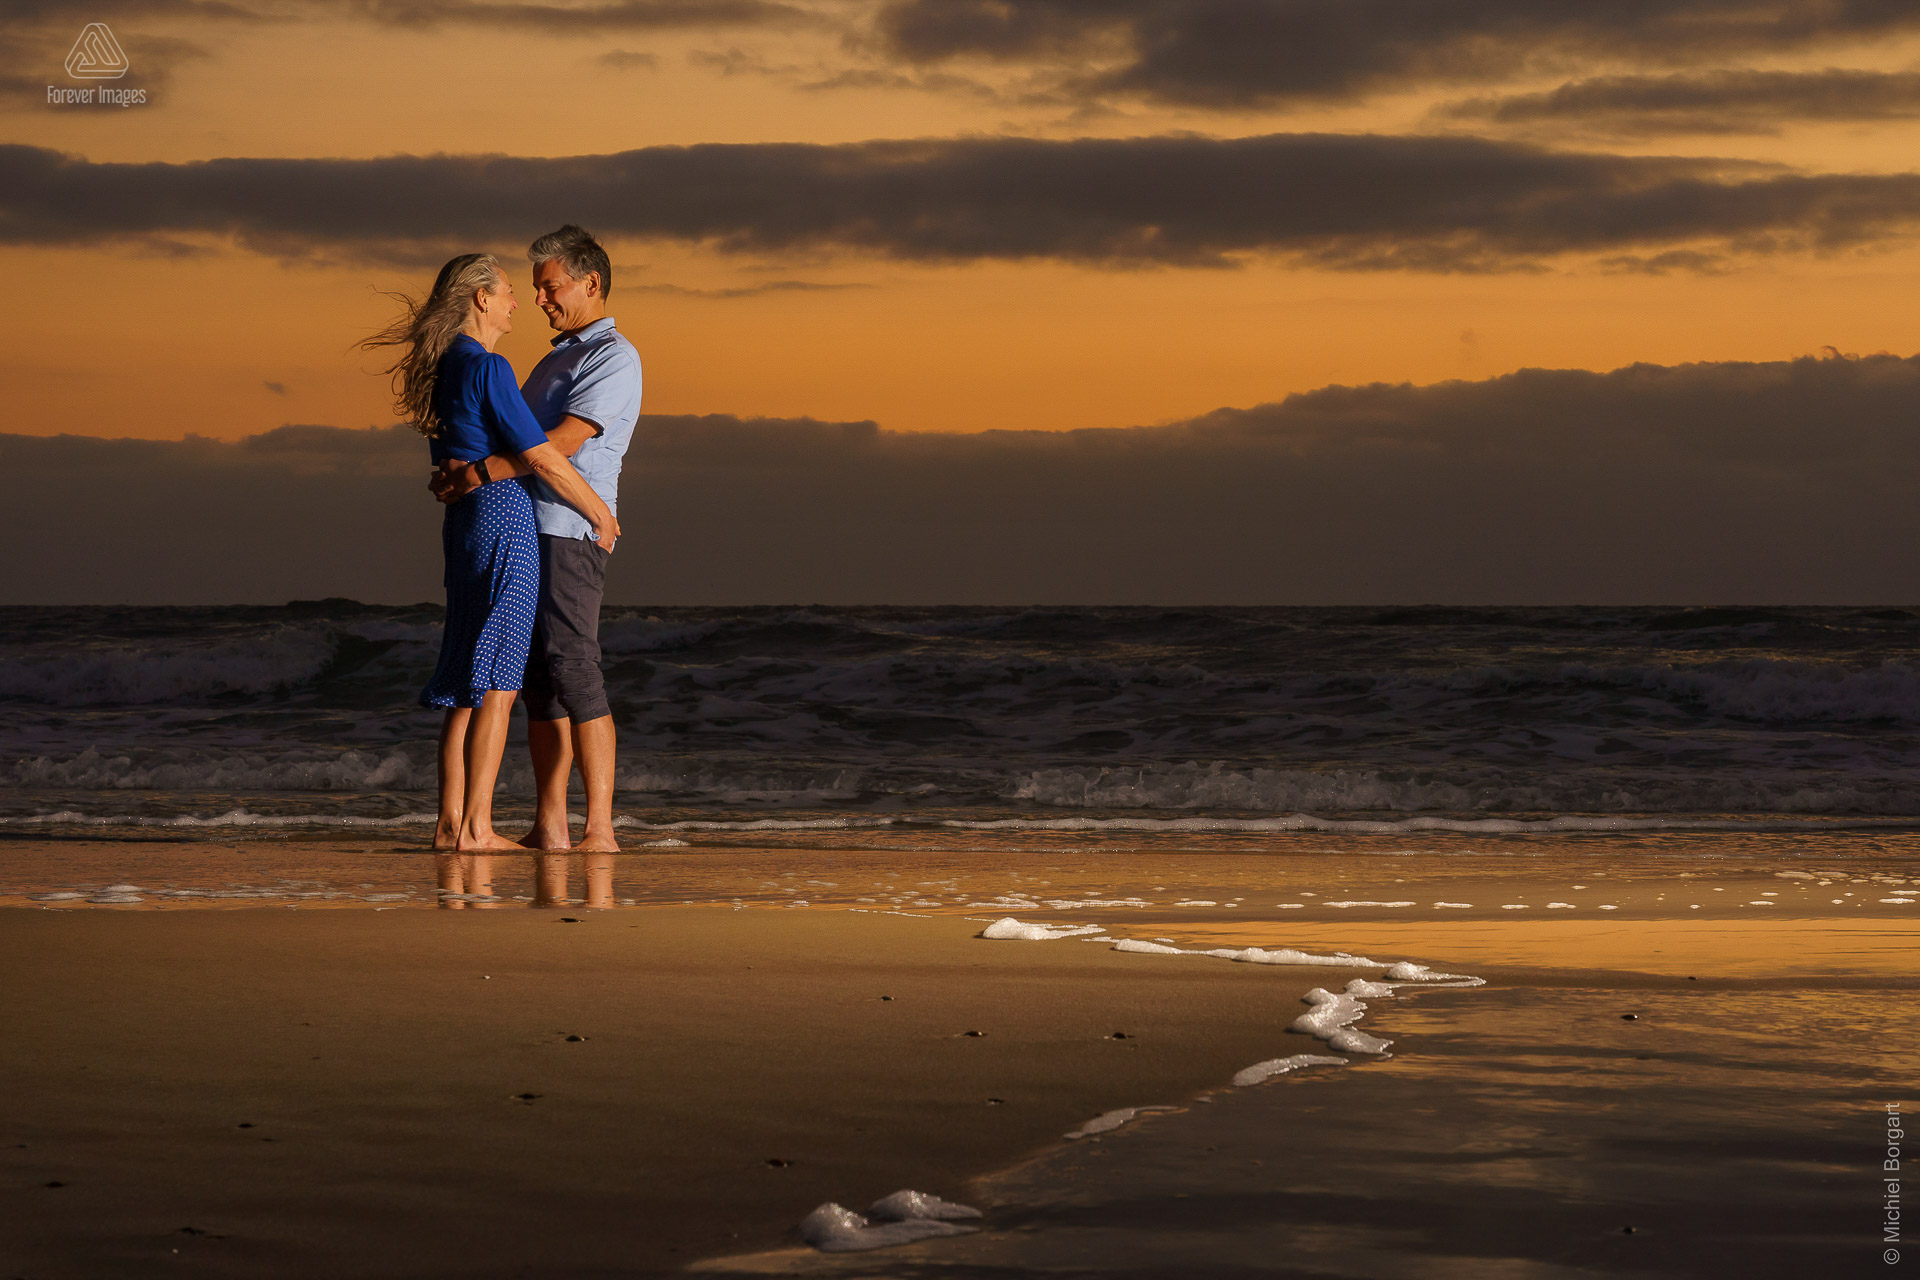 Portrait photo couple romantic on the beach | Harro Esther Mensa HiQ Magazine | Portrait Photographer Michiel Borgart - Forever Images.